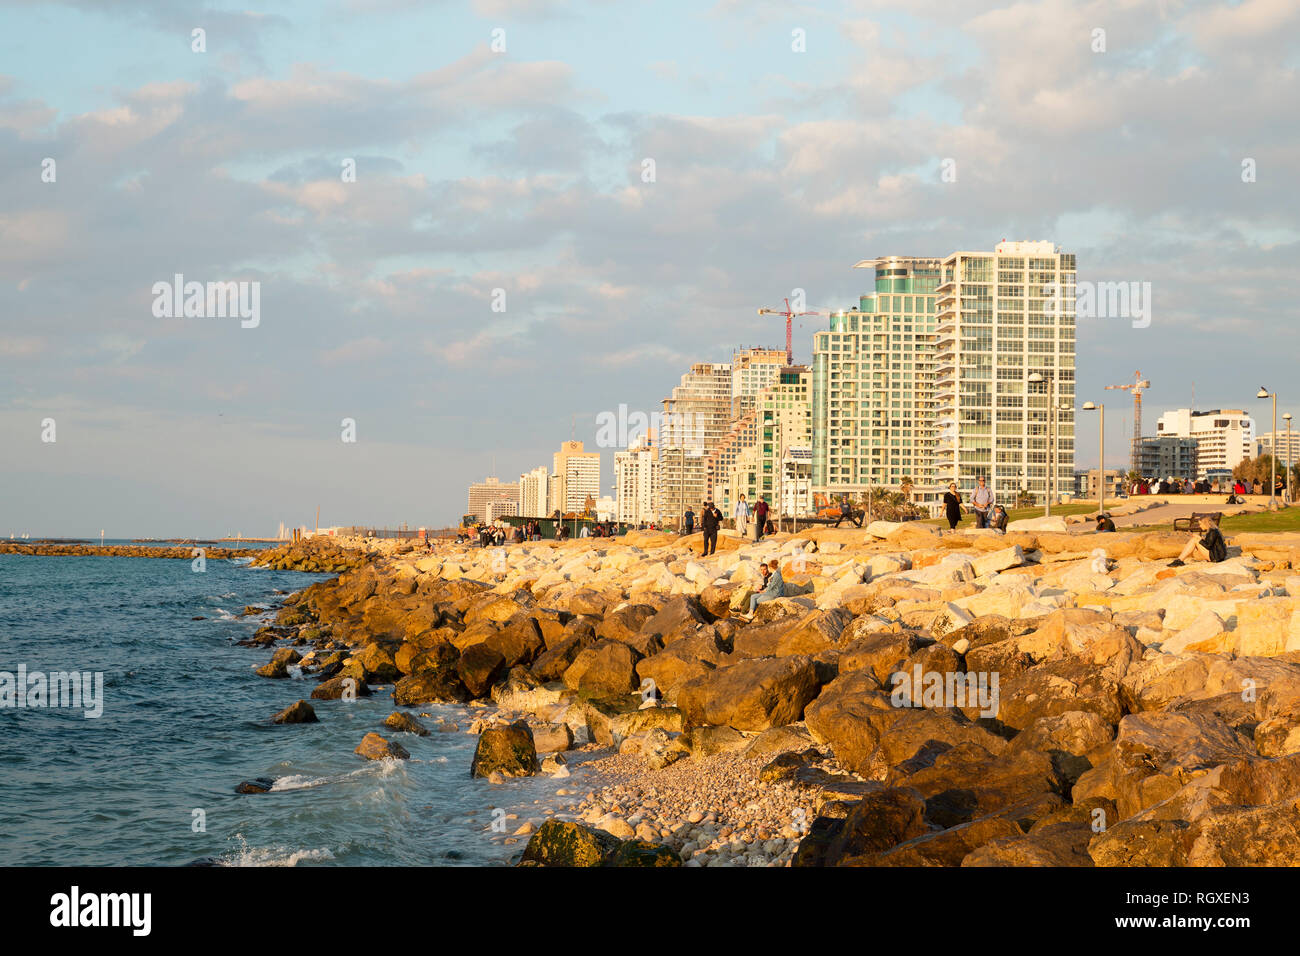 Tel Aviv - Yafo, Israel - December 23, 2018: A beautiful golden sunset scene of Tel Aviv seacoast walk, seafront rocks and the modern architecture at  Stock Photo